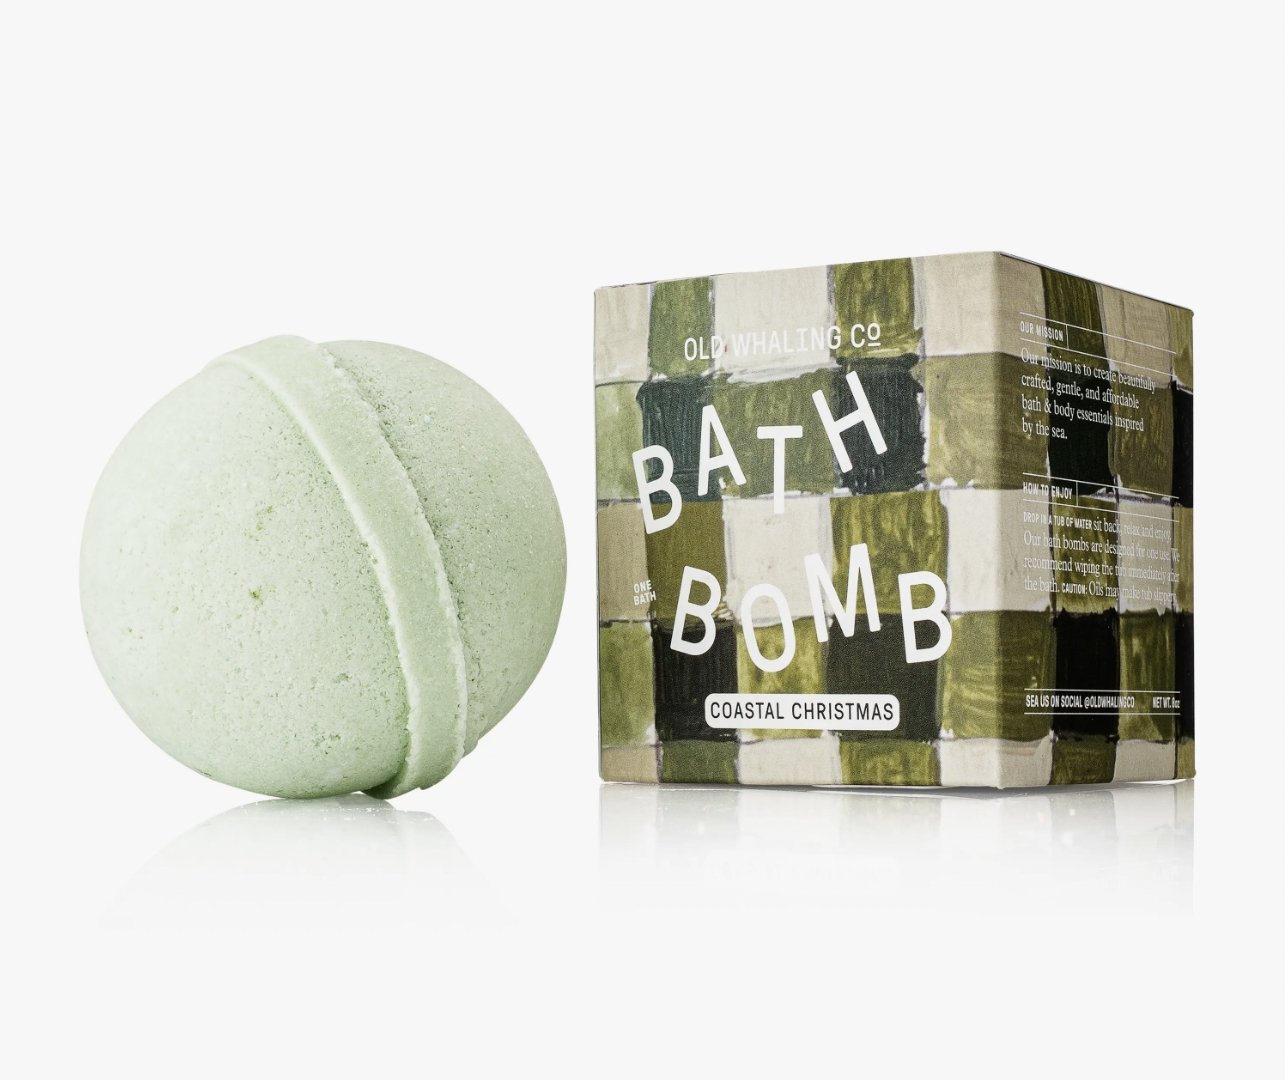 Da Bomb Bath Bomb co-founders hold first warehouse sale